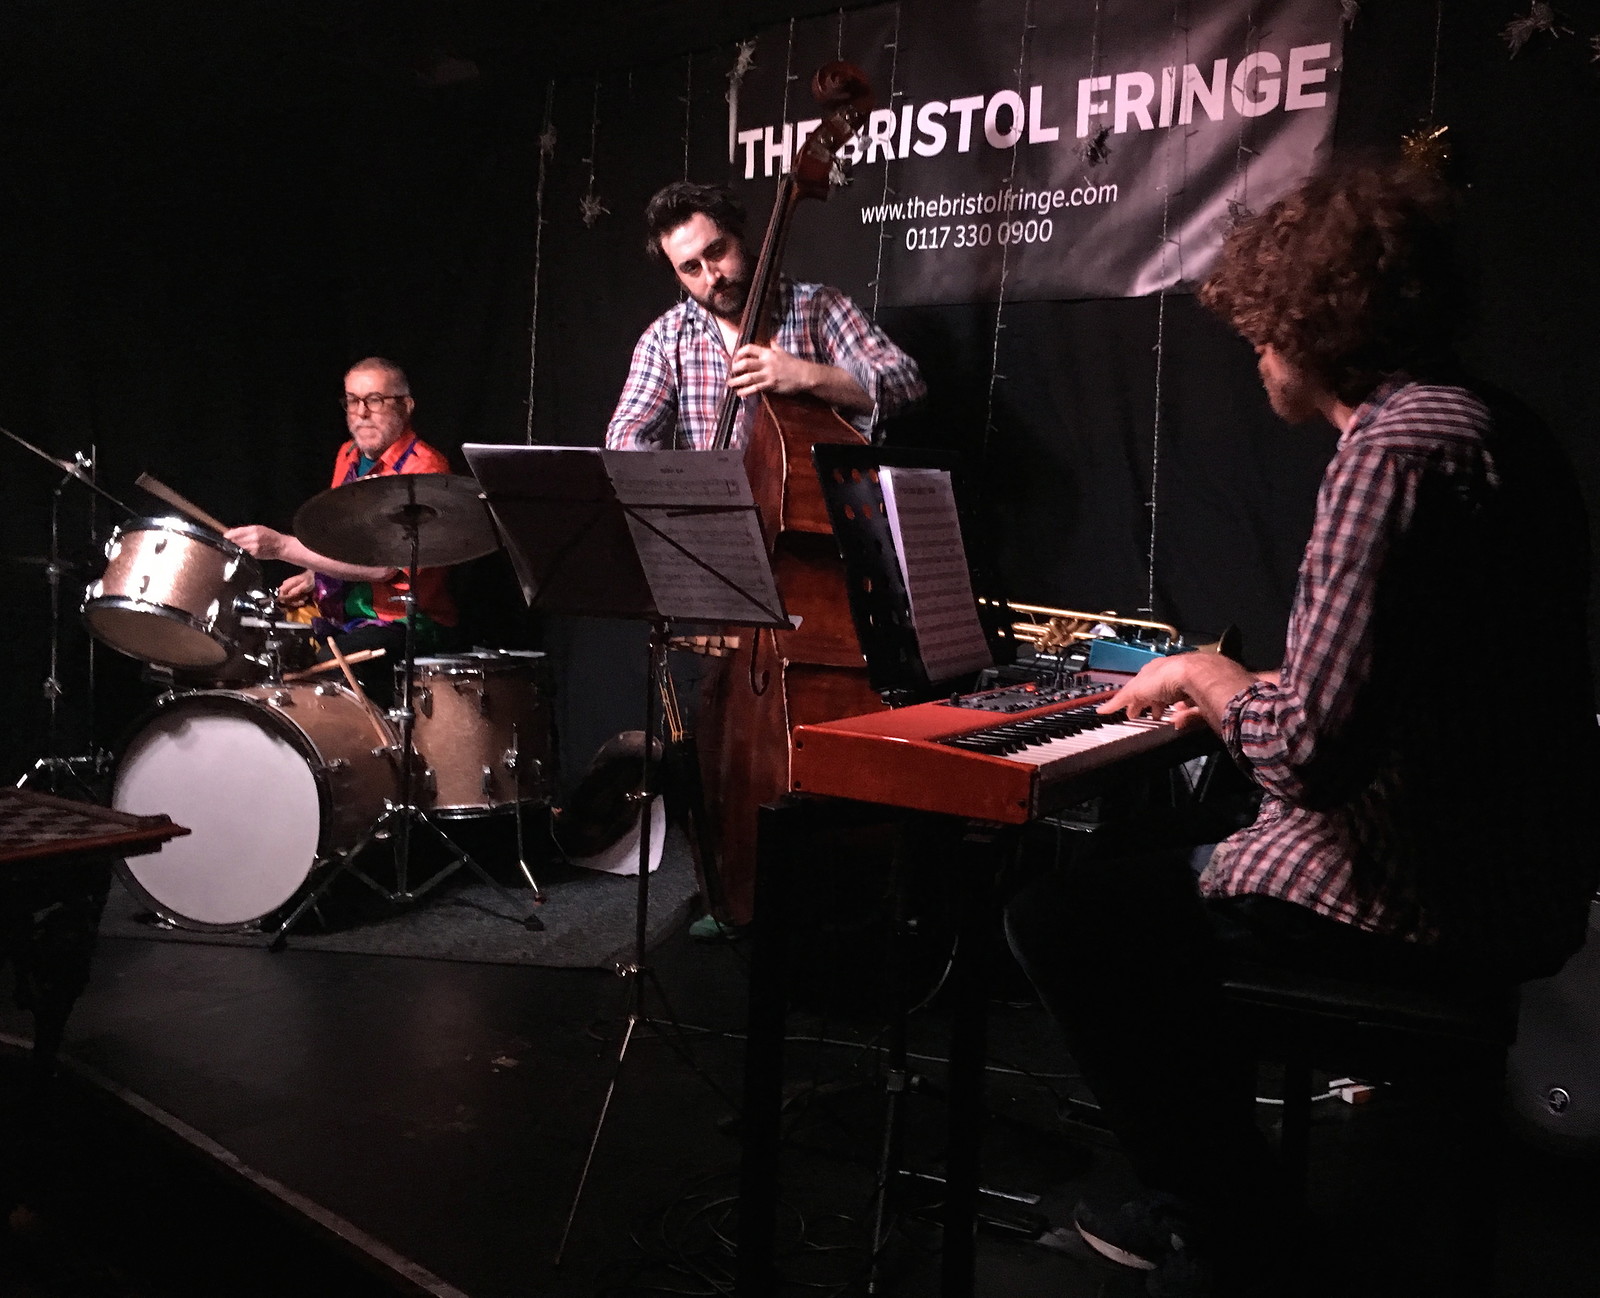 PERDATO at The Bristol Fringe